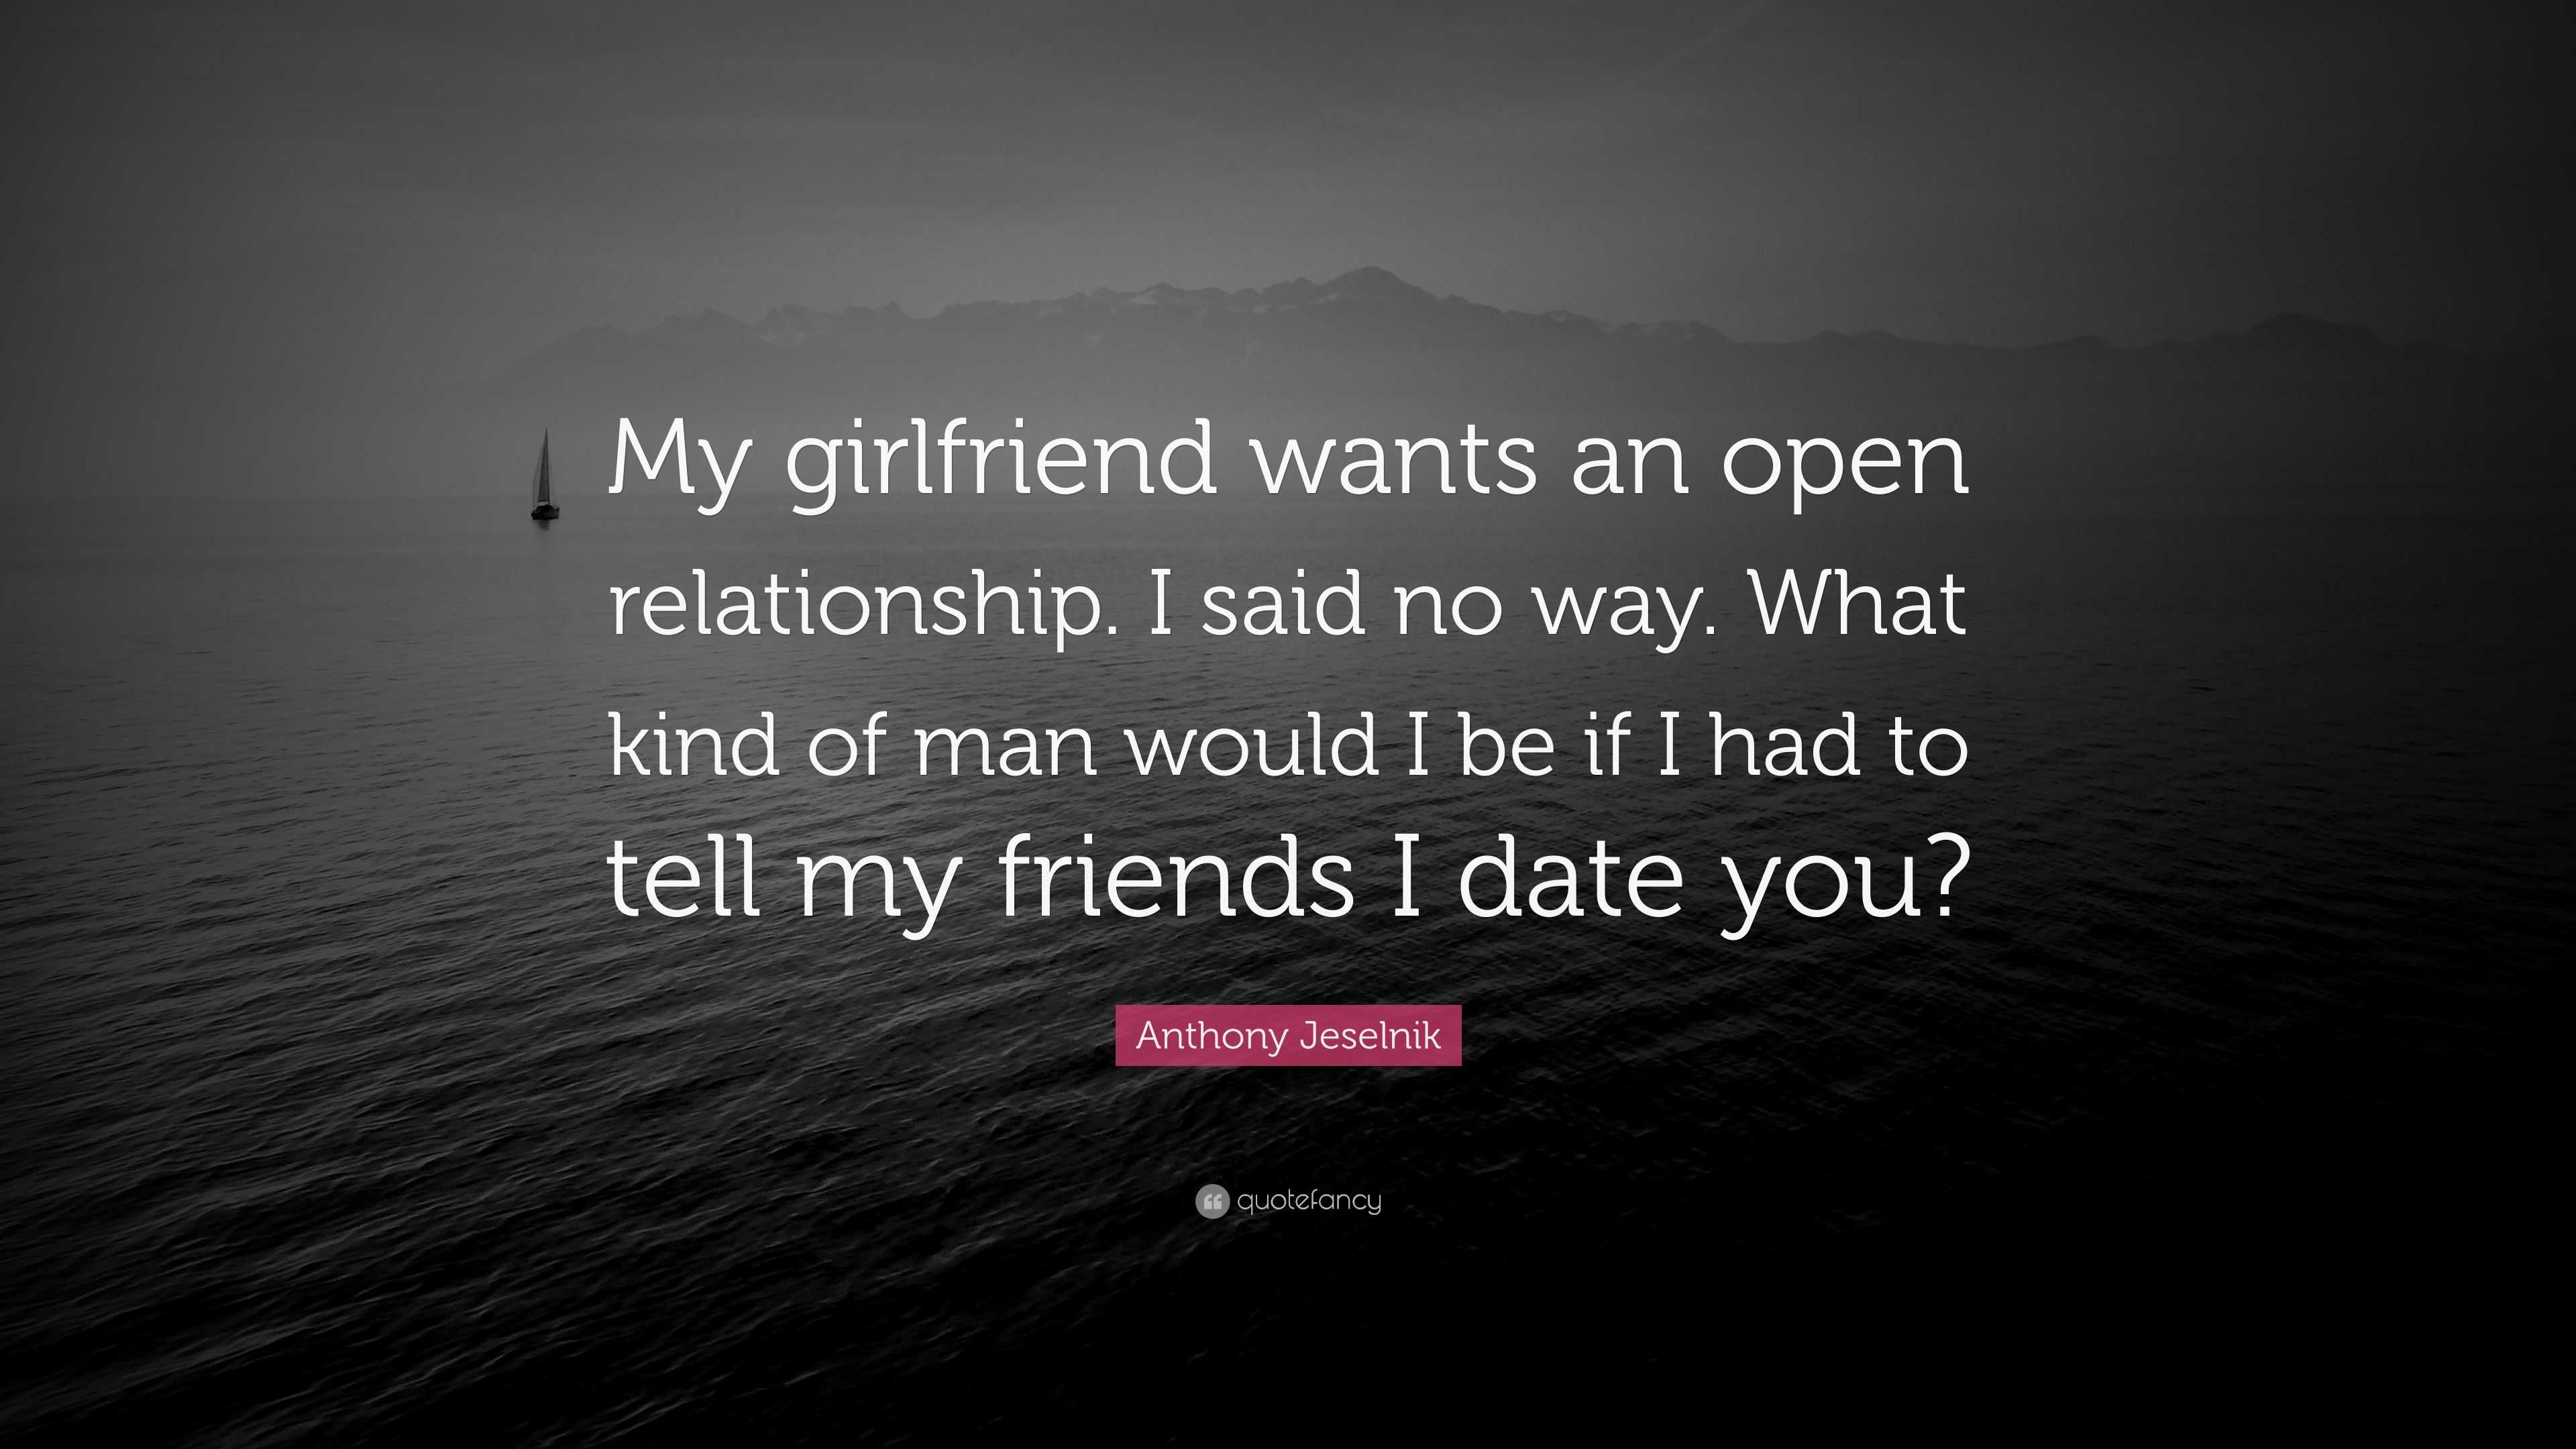 Wife wants open relationship